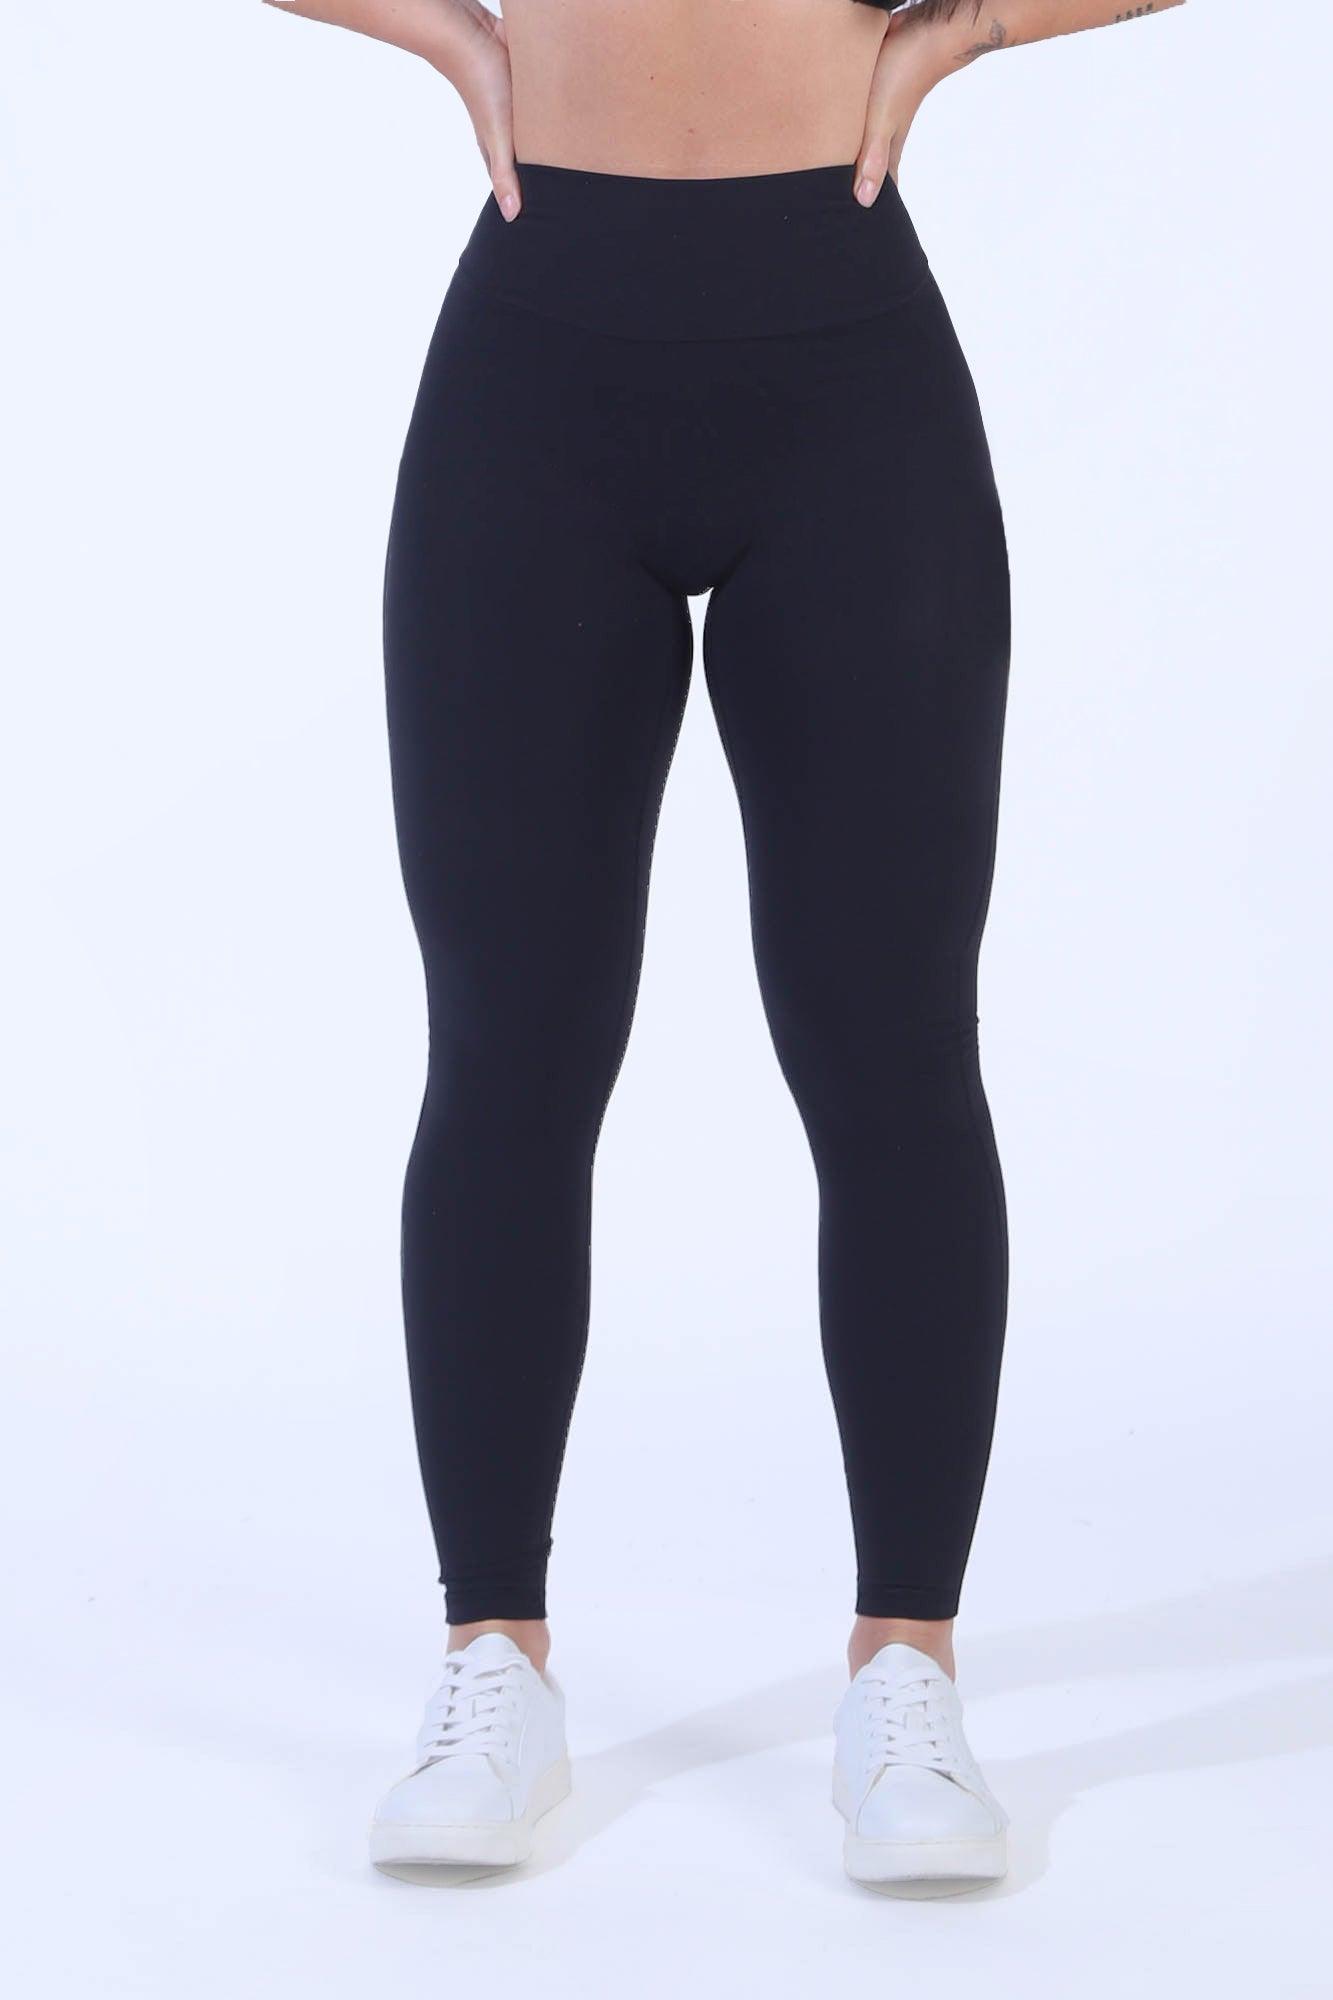 Women's buttR Yoga Pants - Midnight Black (Double Pocket)